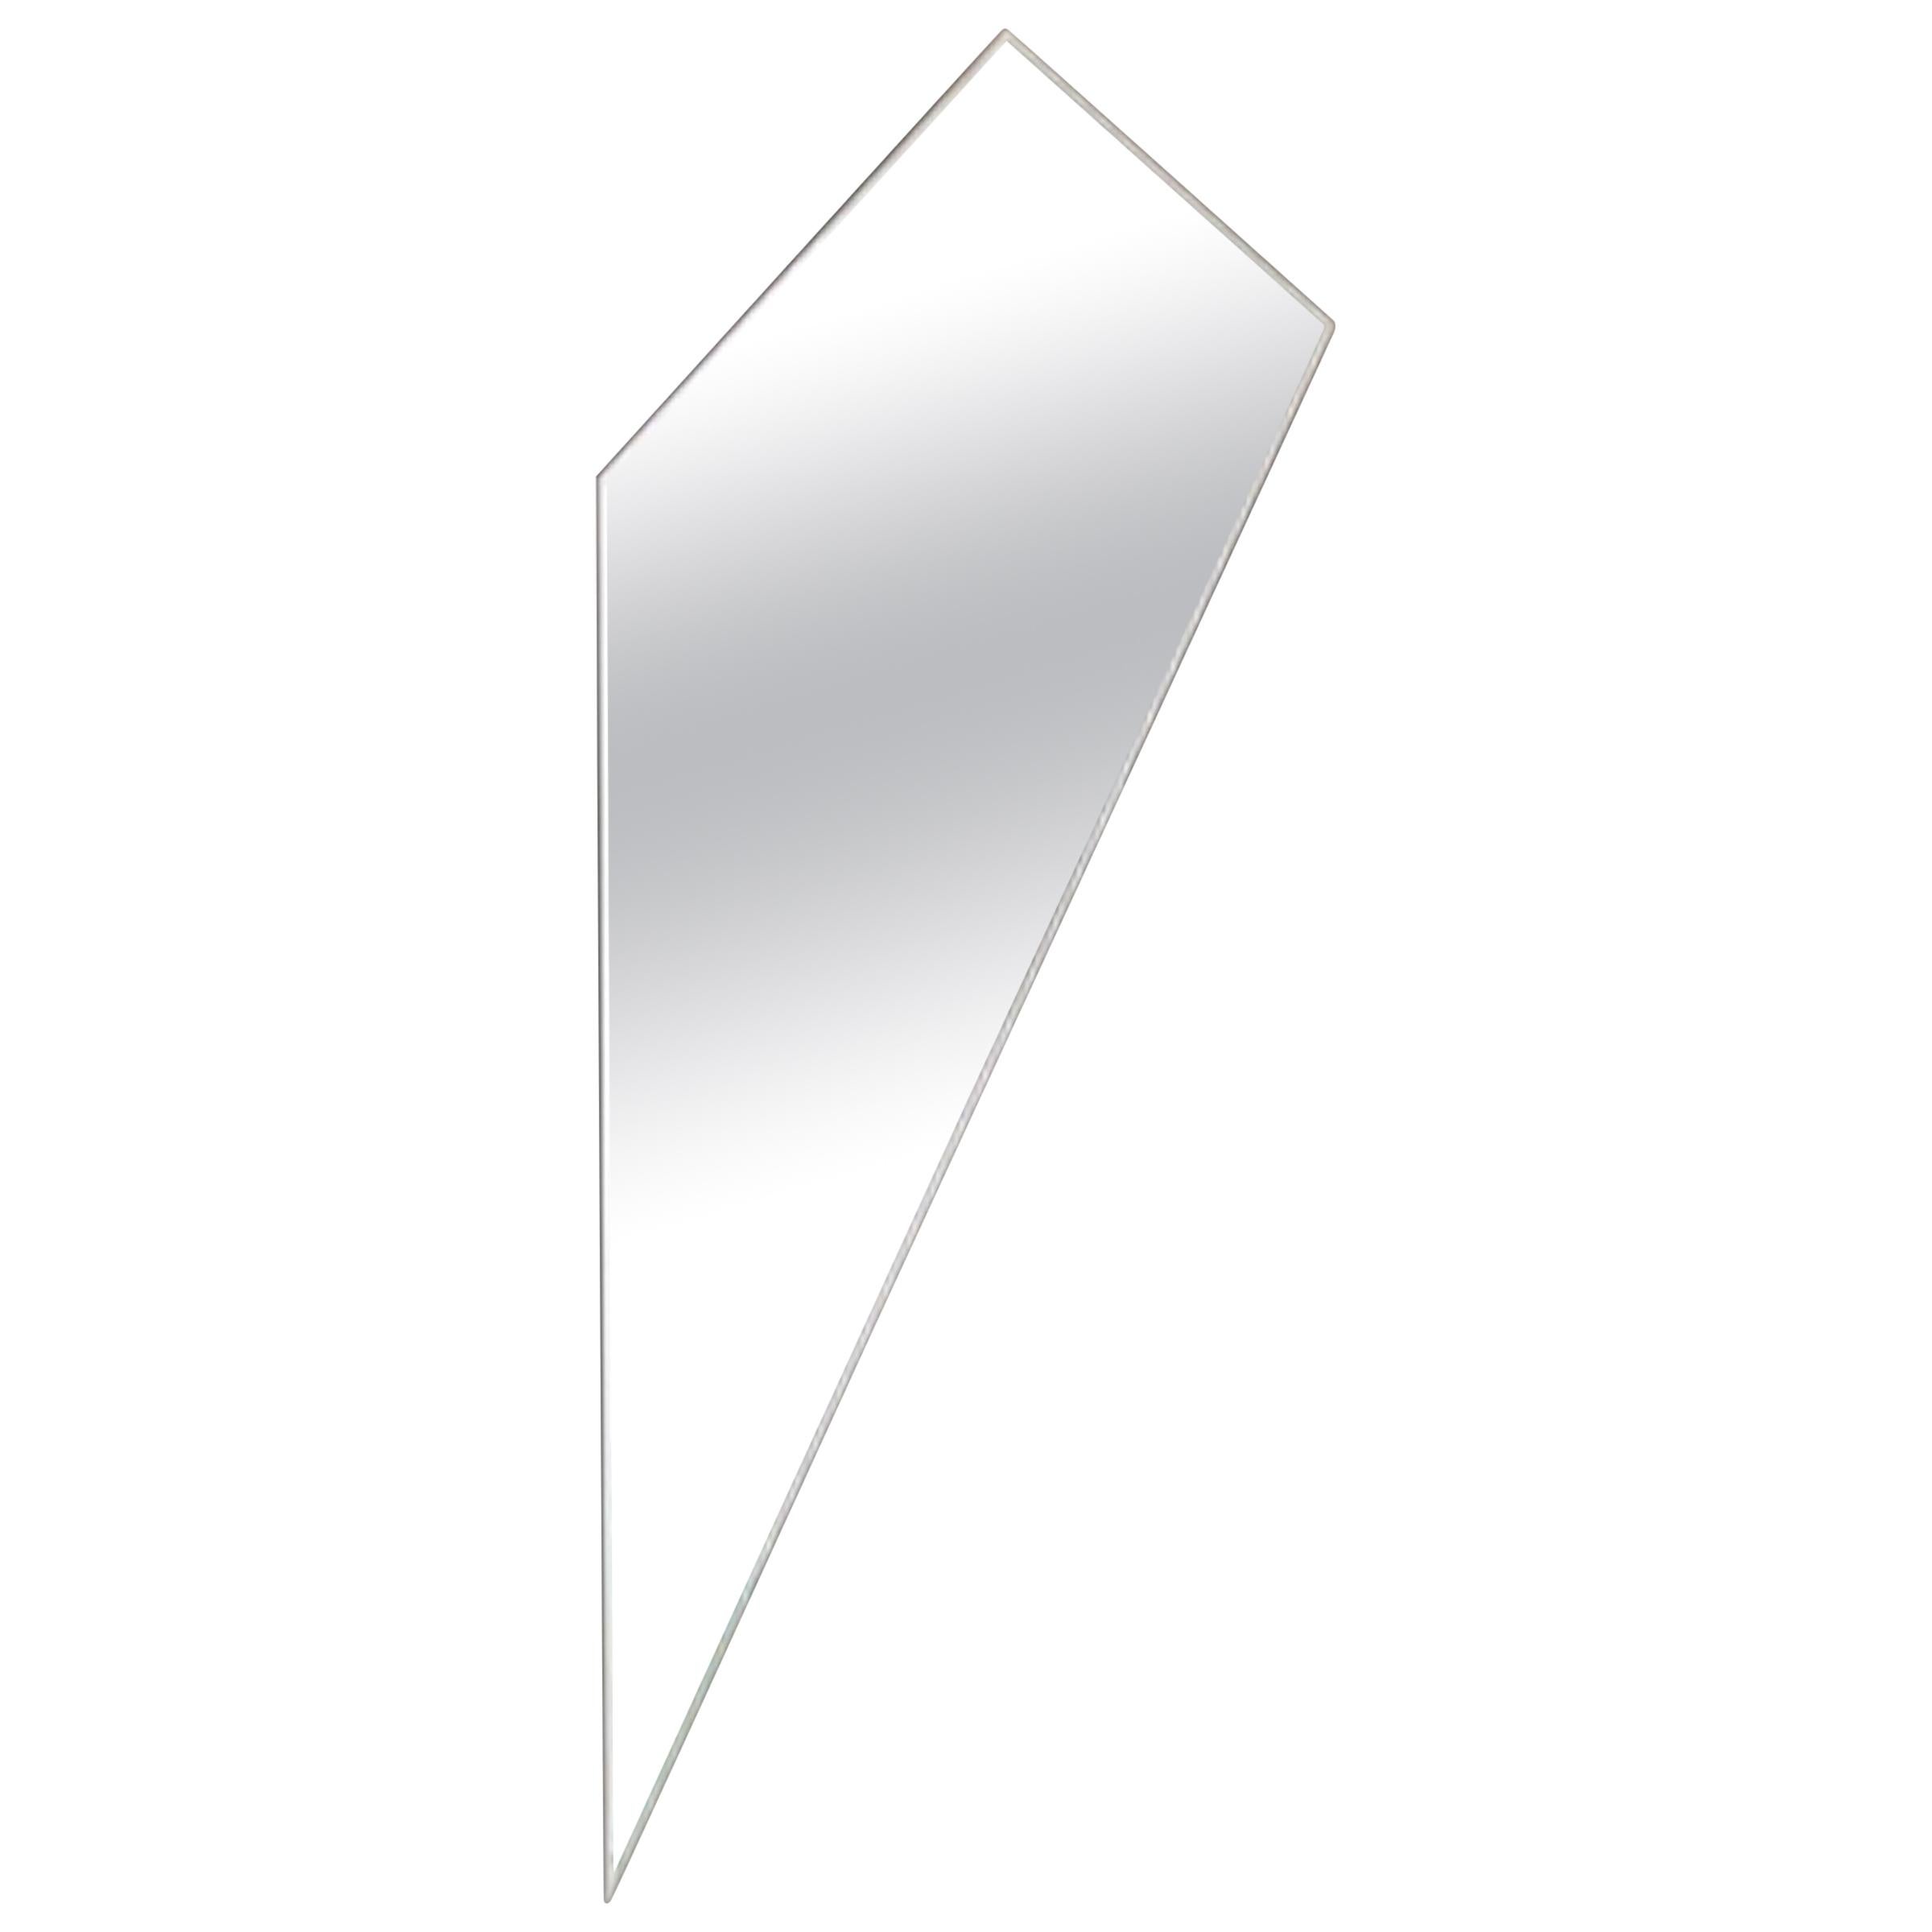 Fiam Mirage MI/B Wall Mirror in Glass, by Daniel Libeskind